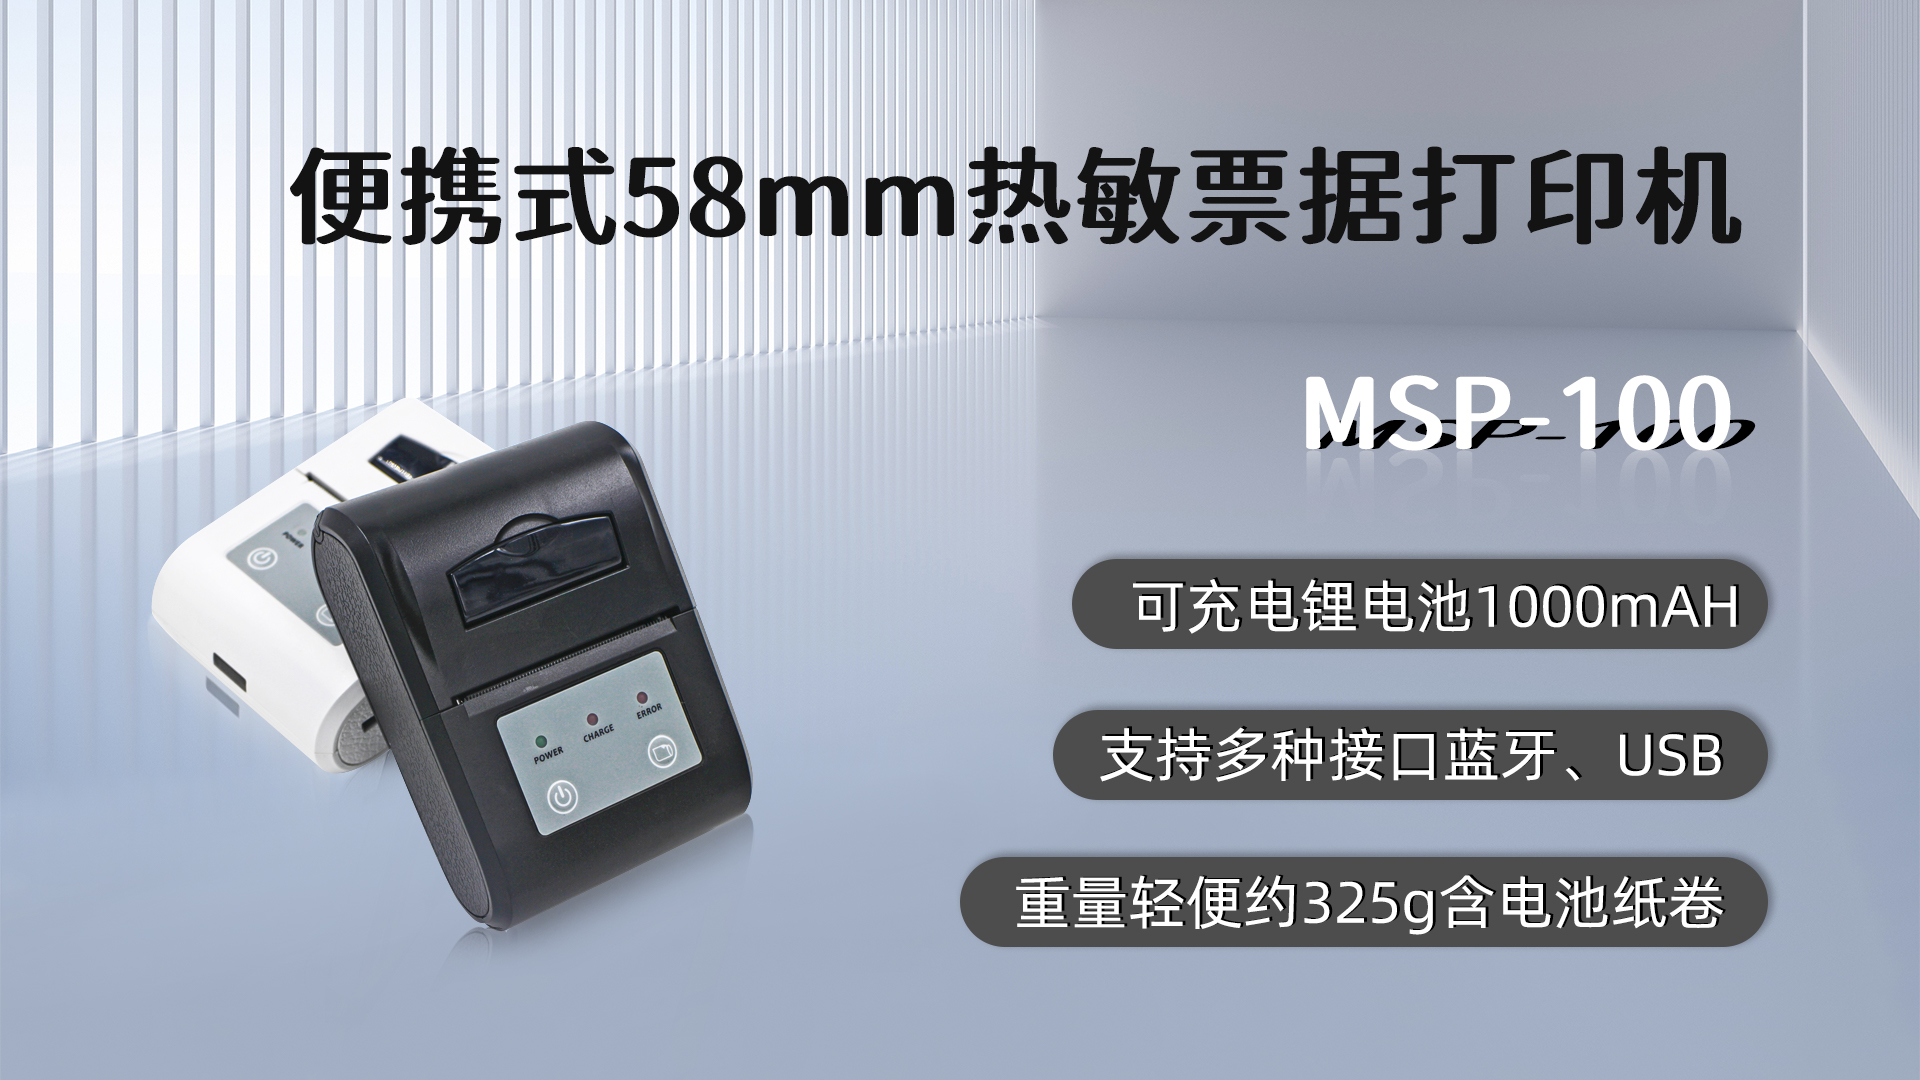 MSP-100便携式票据打印机的应用